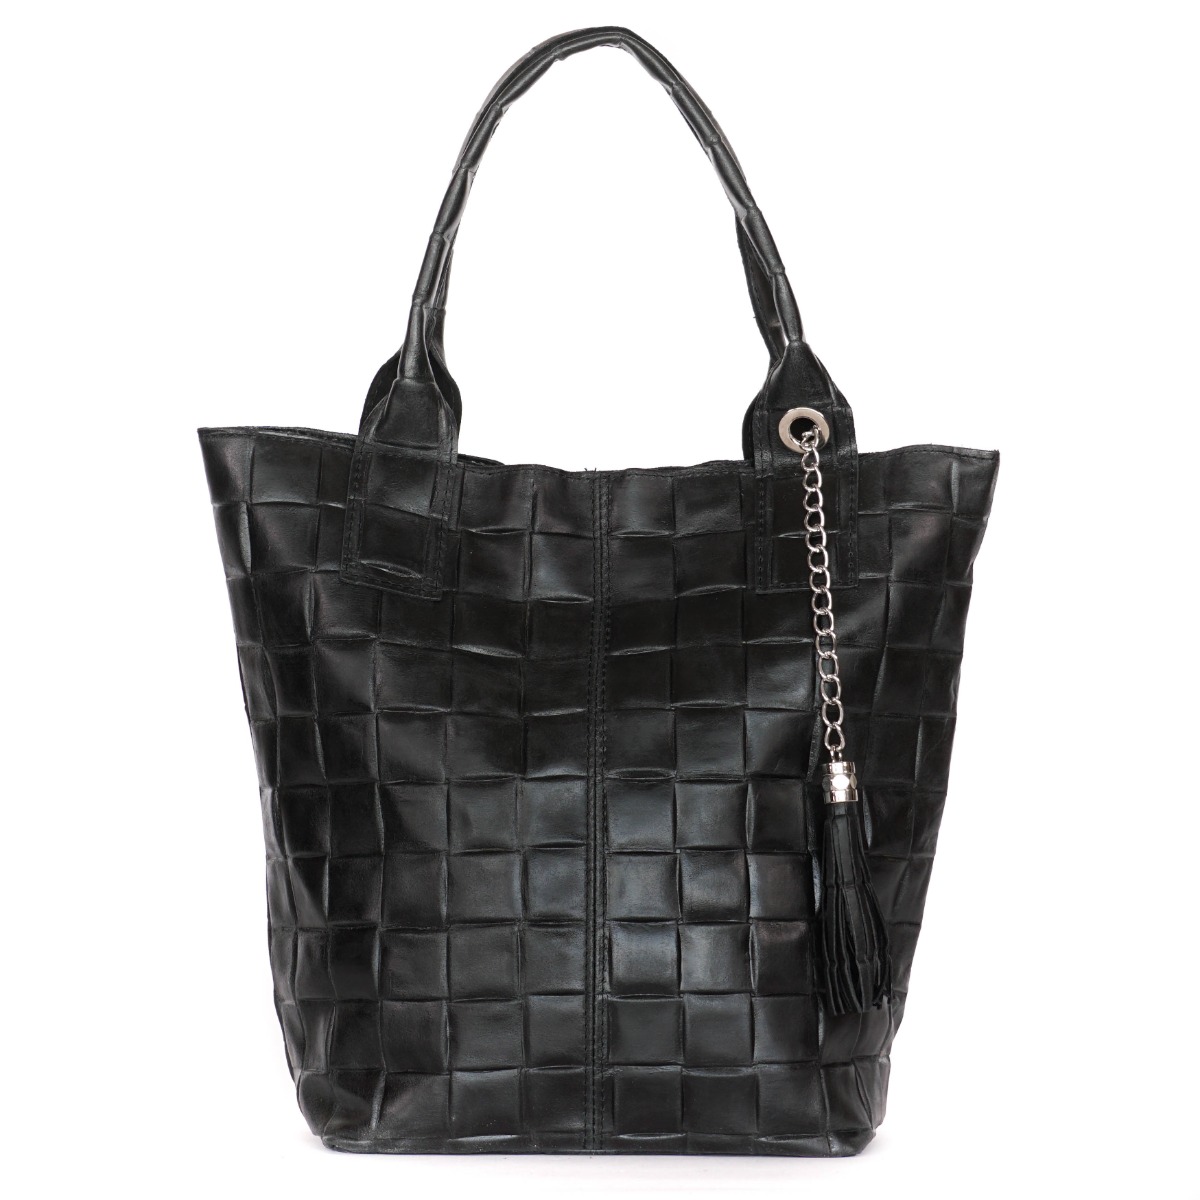 Black genuine leather women's tote bag everyday wear